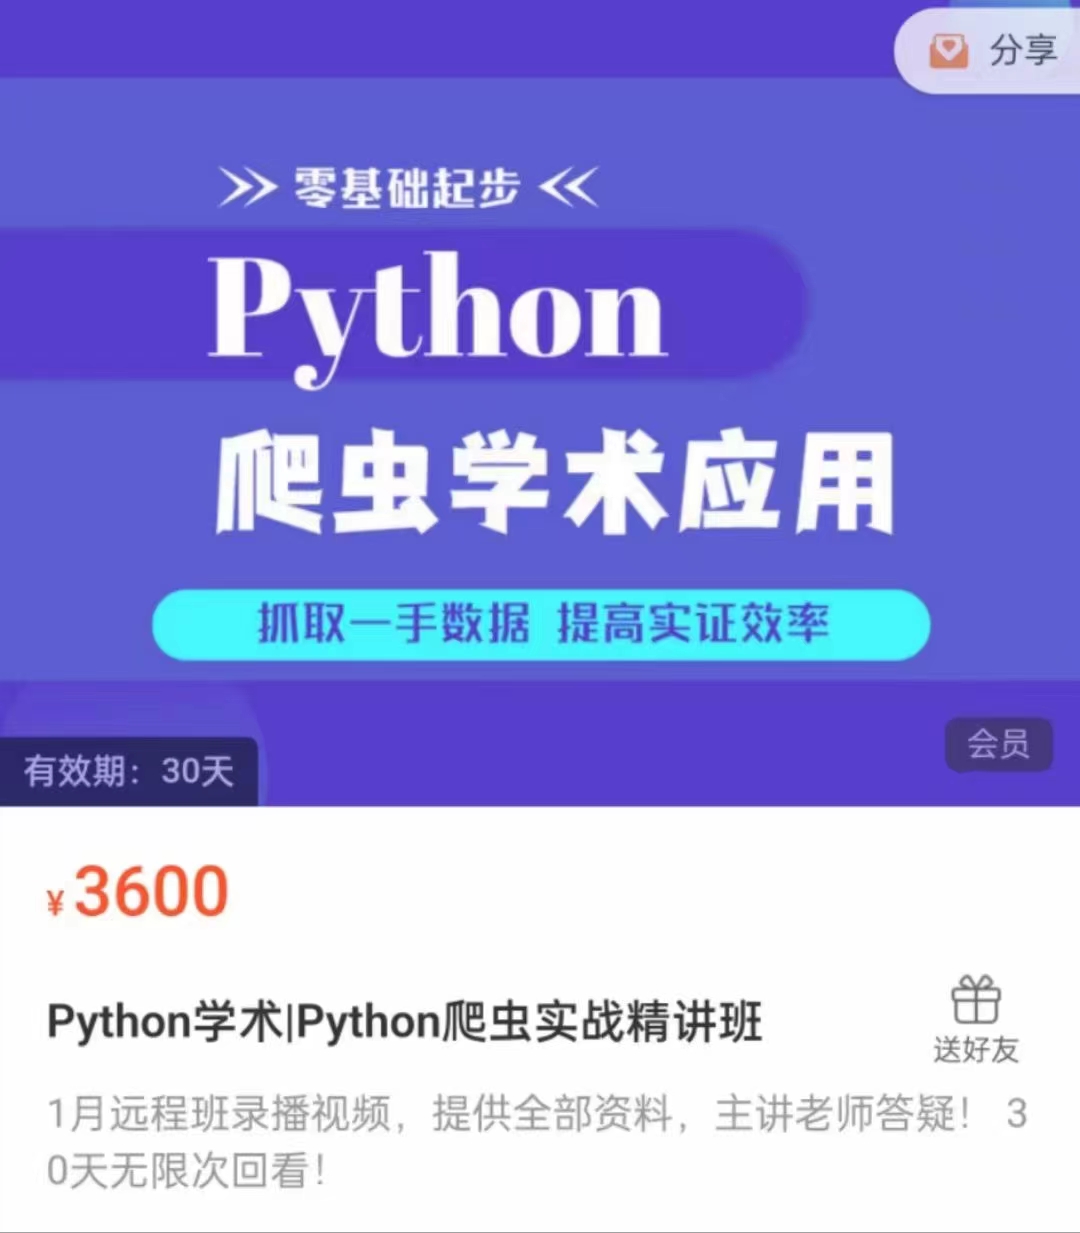 199?Python学术|Python爬虫实战精讲班